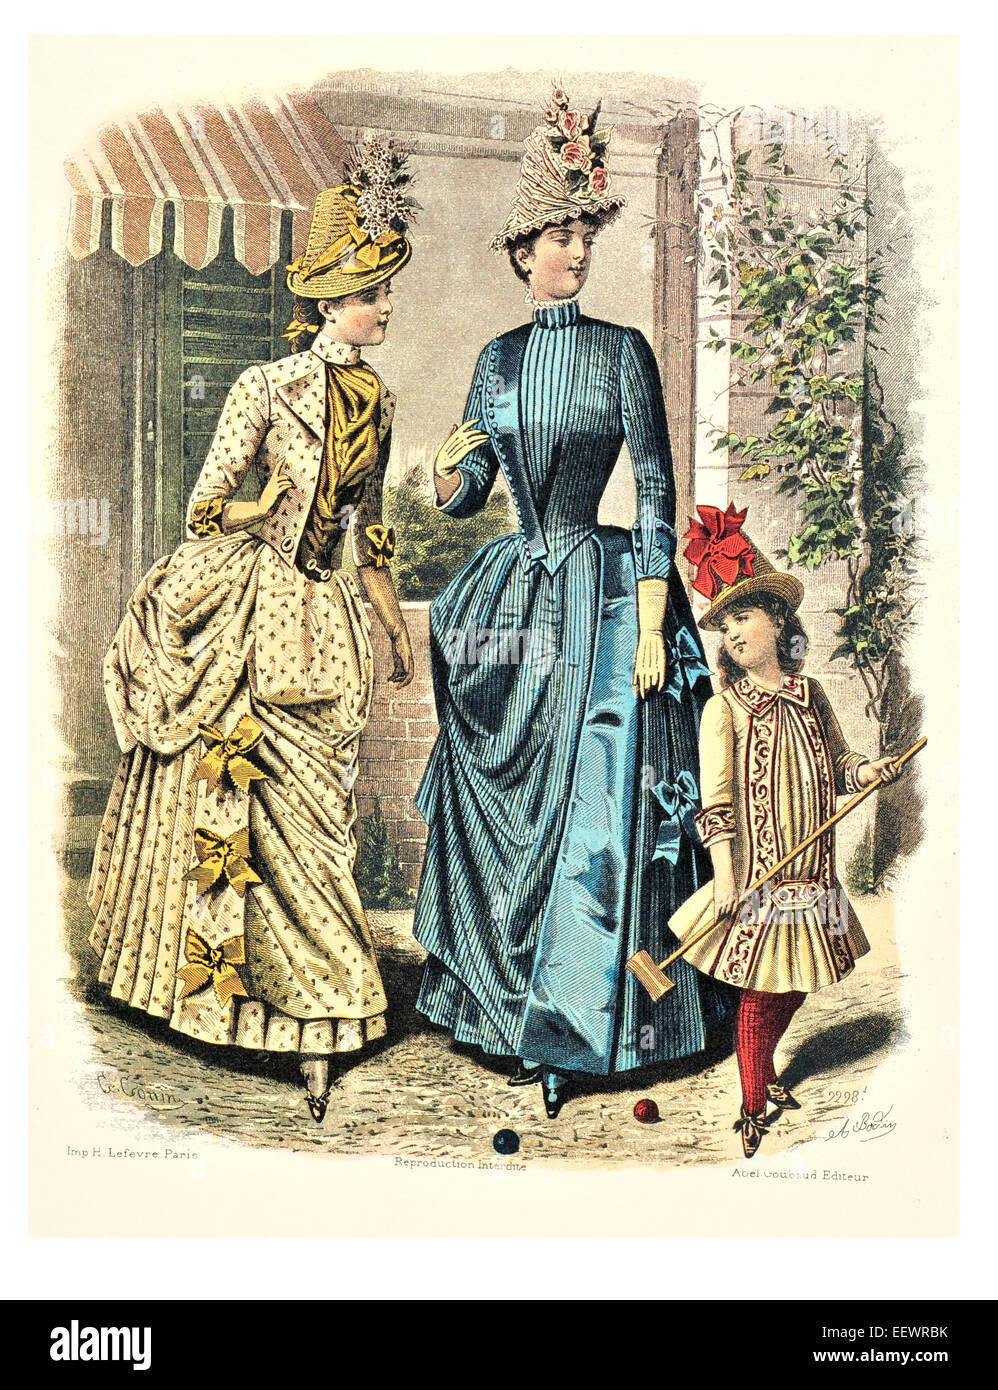 La Mode Illustree trajes de época victoriana moda vestido vestidos vestido falda velo cuff florituras muselina Bordado la tapa Fotografía de - Alamy